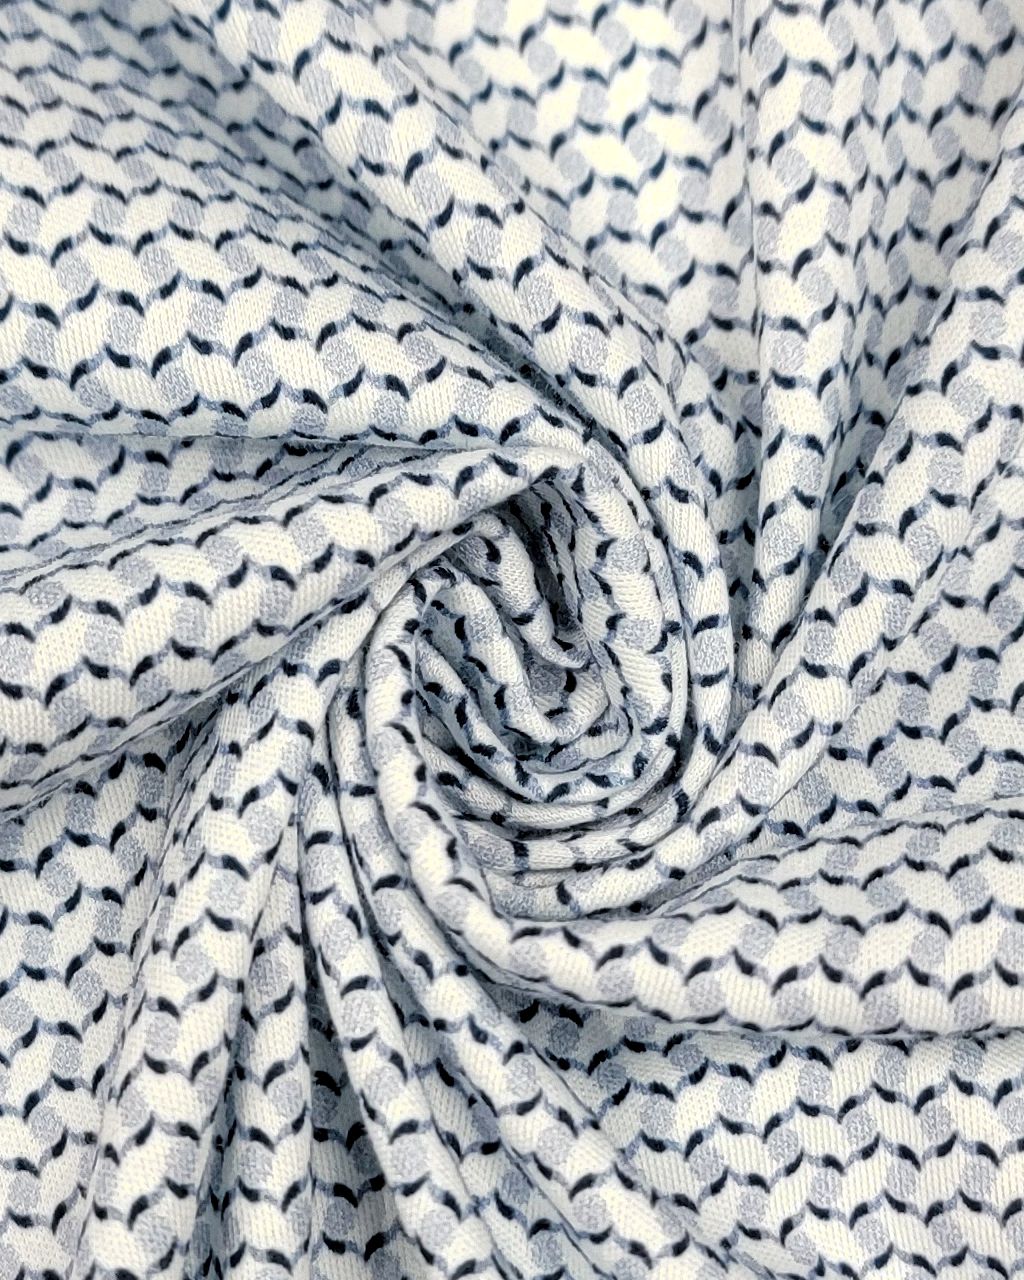 Desoto Long Sleeve Jersey Shirt in Light Blue Geometric Pattern